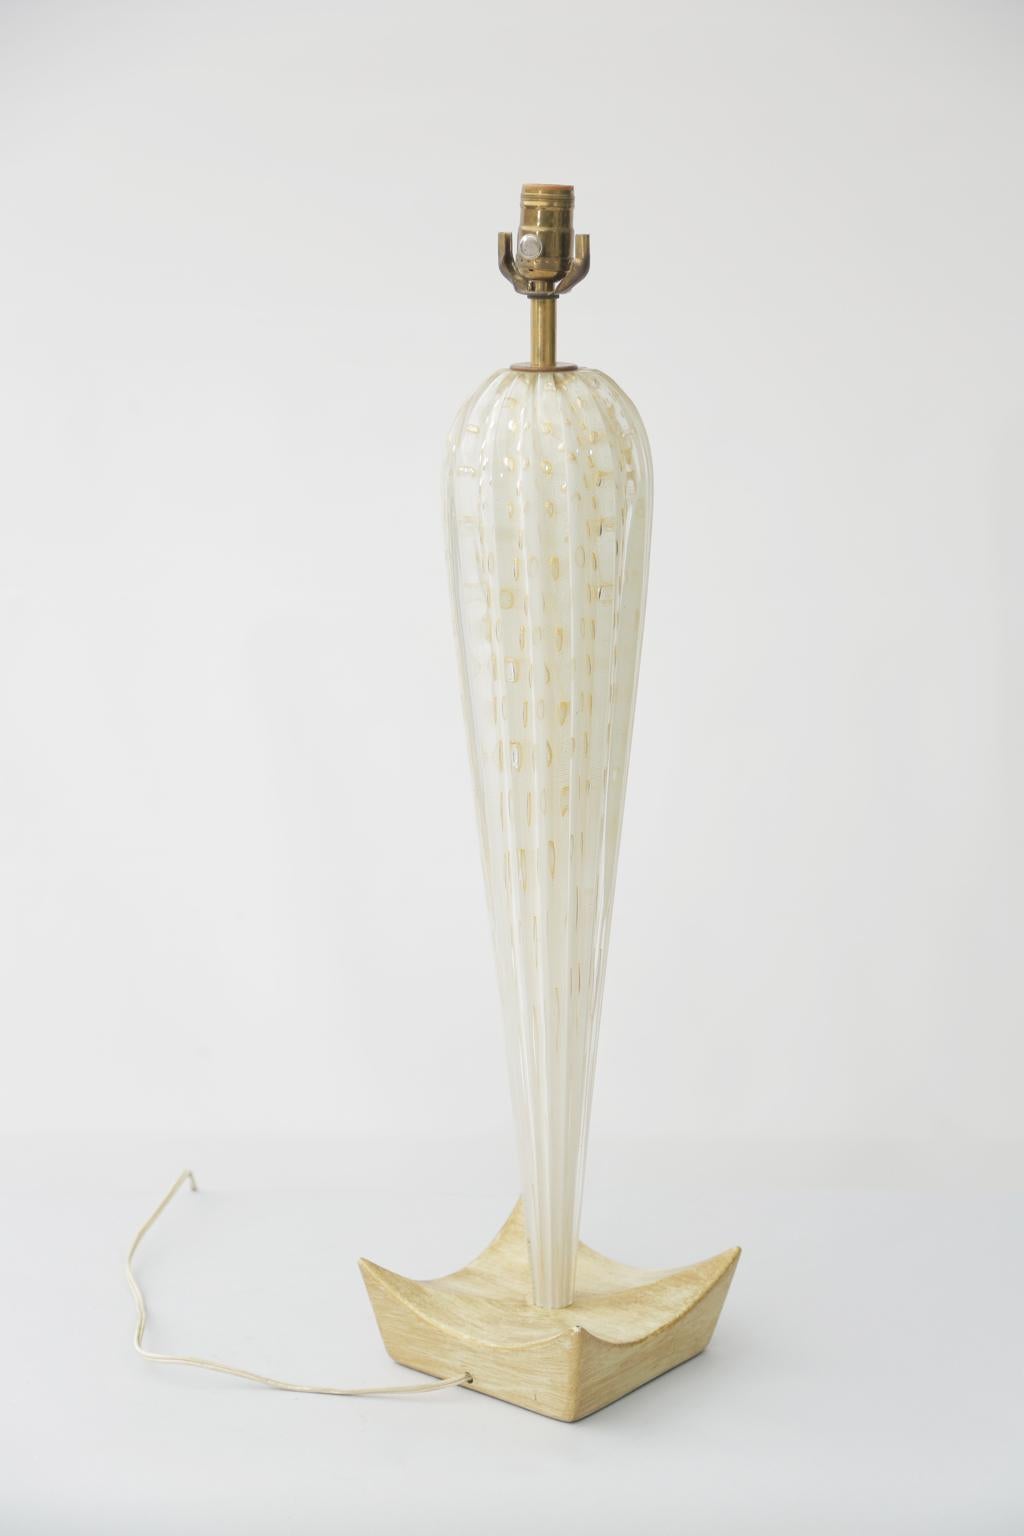 20th Century Cristallo Murano Lamp with Gold Inclusions For Sale